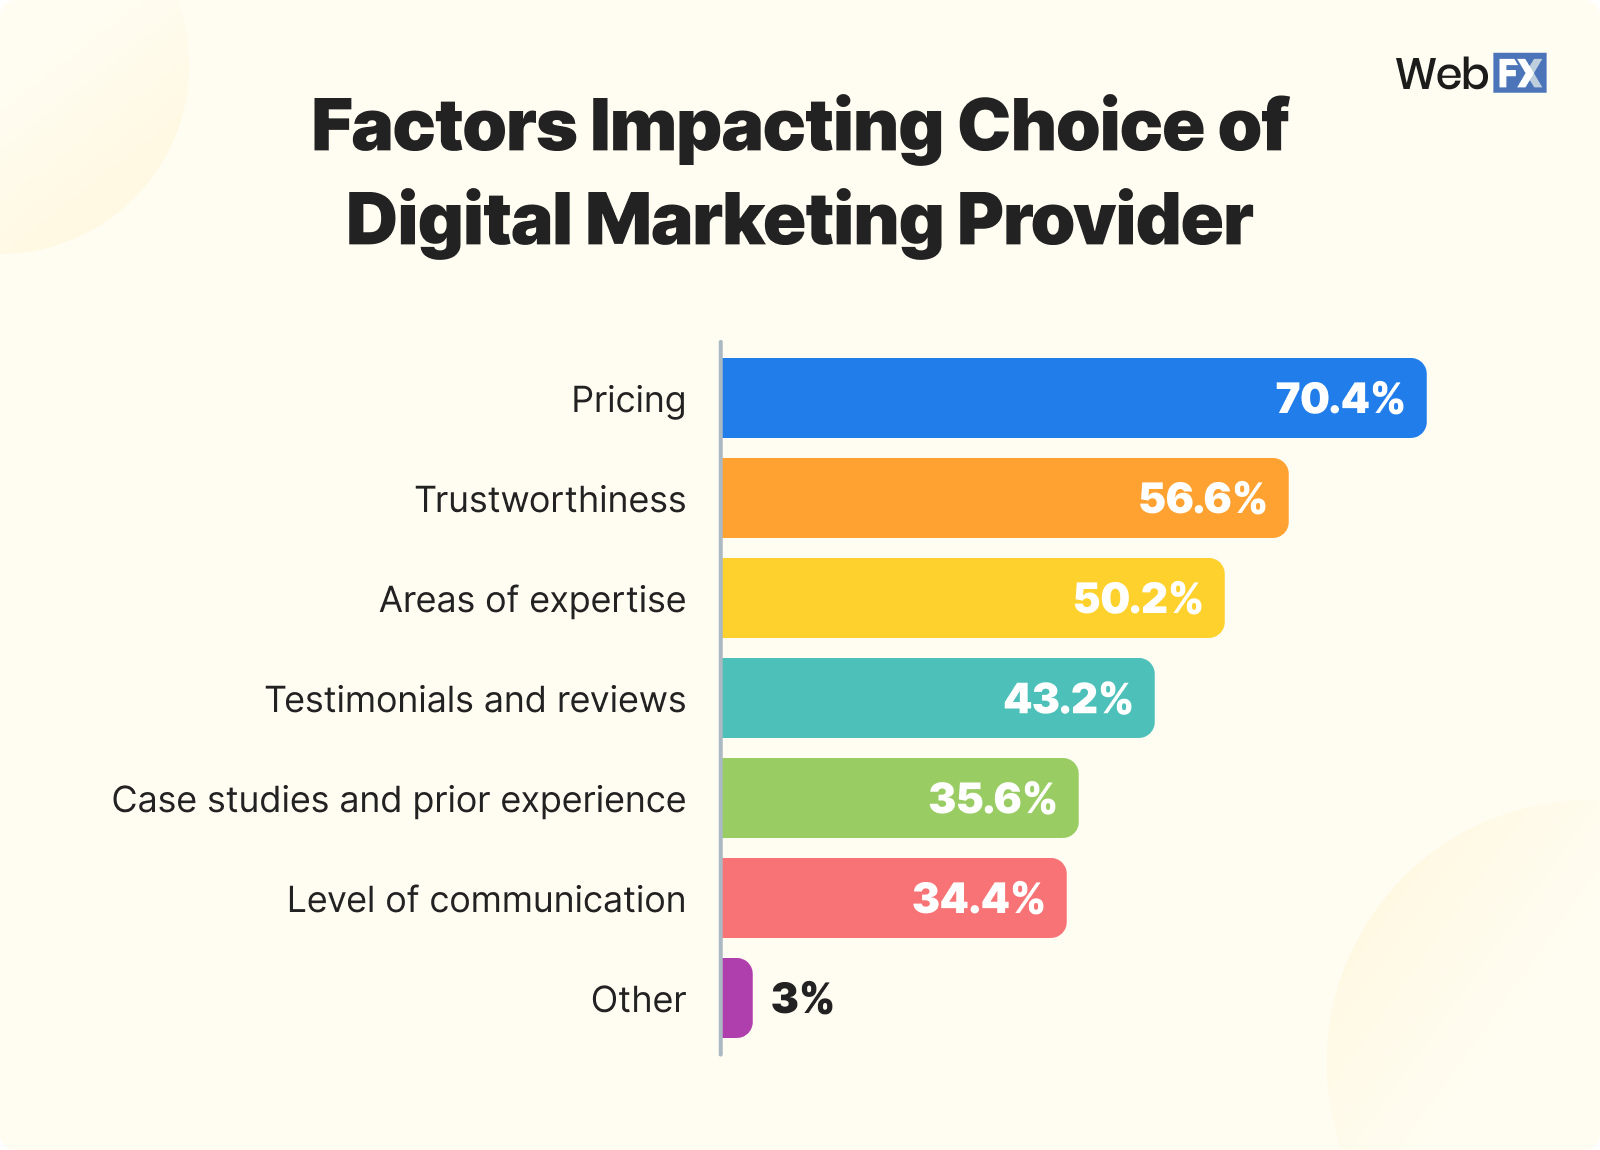 factors impacting digital marketing provider choice